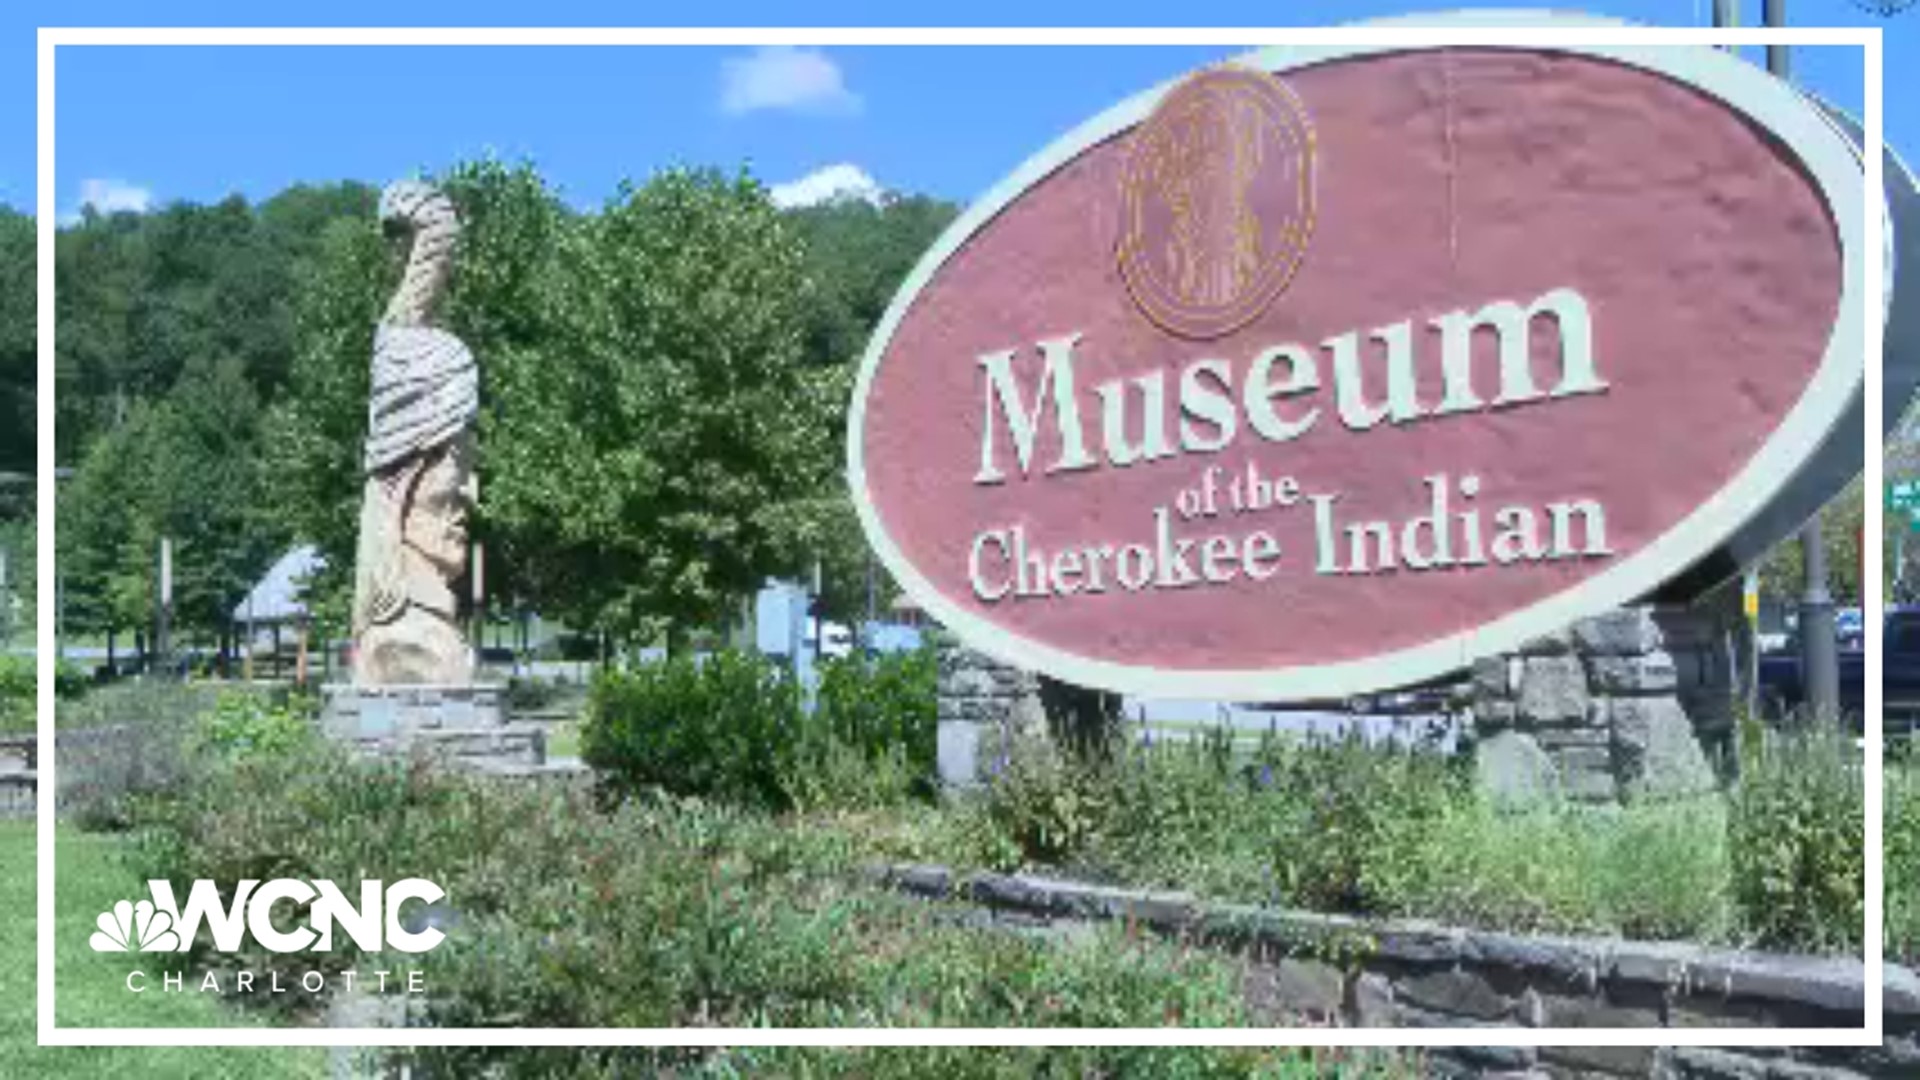 The museum is welcoming modern Cherokee arts to help update museum displays